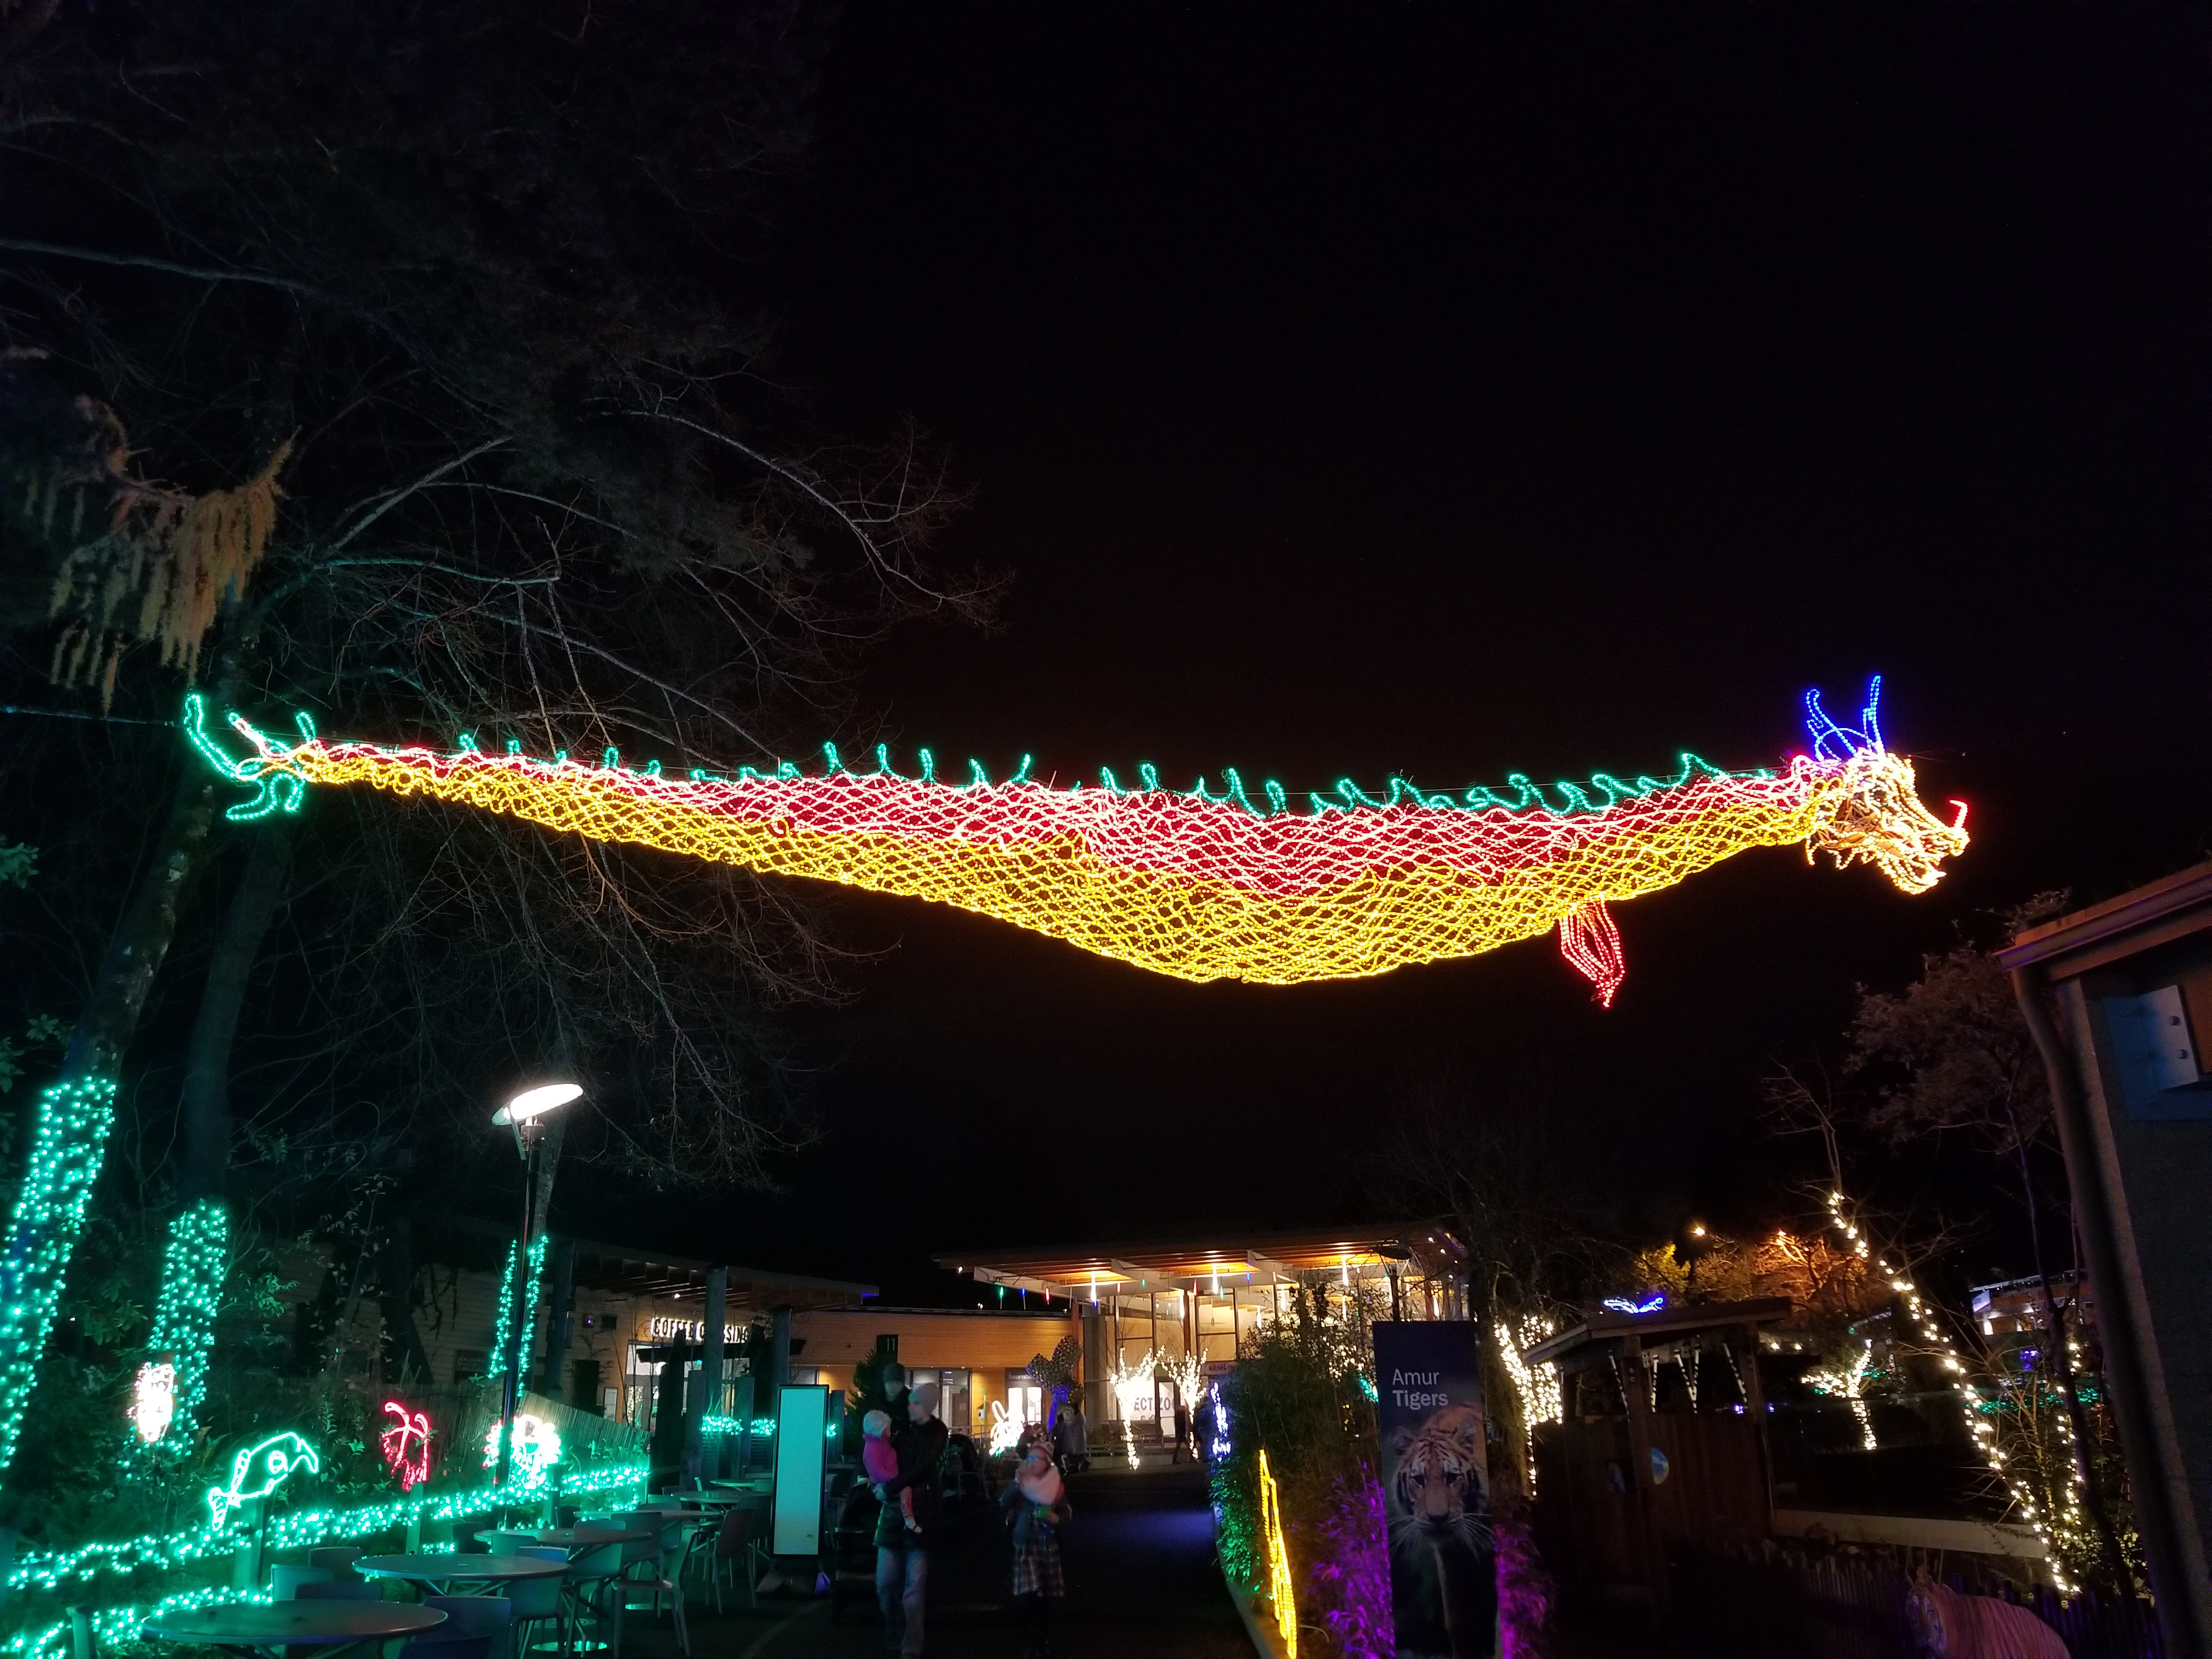 Thanksgiving Visit to Portland - Zoo Lights Dragon